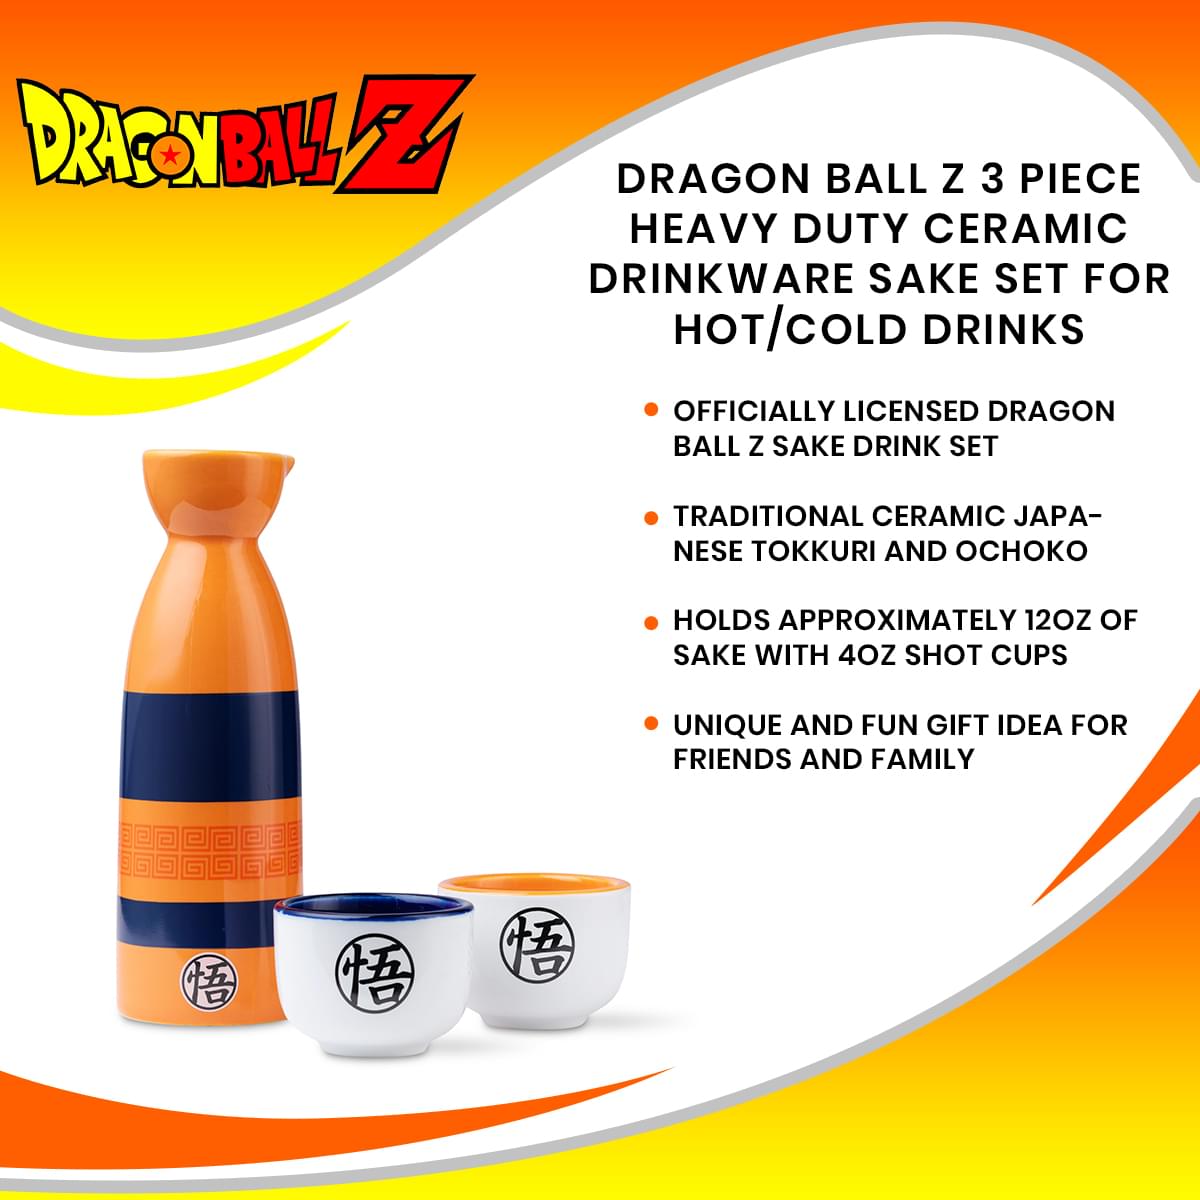 Dragon Ball Z 3 Piece Heavy Duty Ceramic Drinkware Sake Set For Hot/Cold Drinks